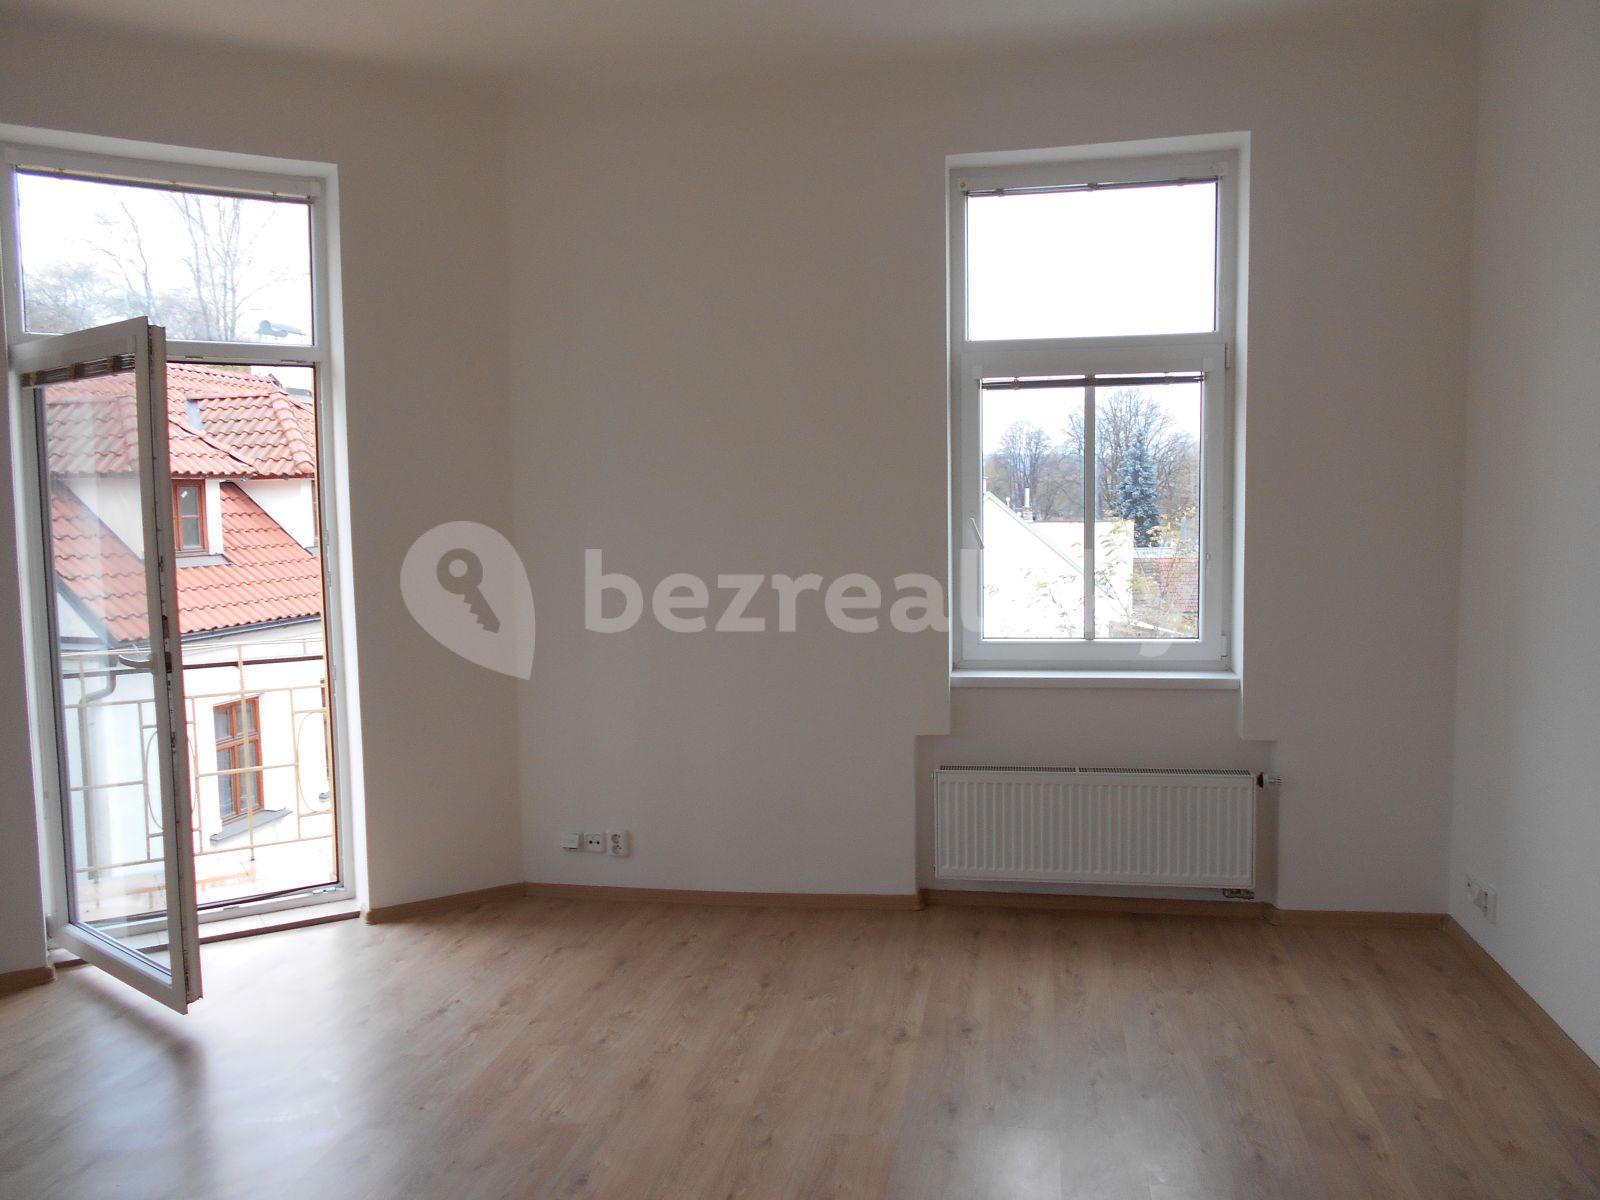 2 bedroom flat to rent, 73 m², Legií, Týn nad Vltavou, Jihočeský Region